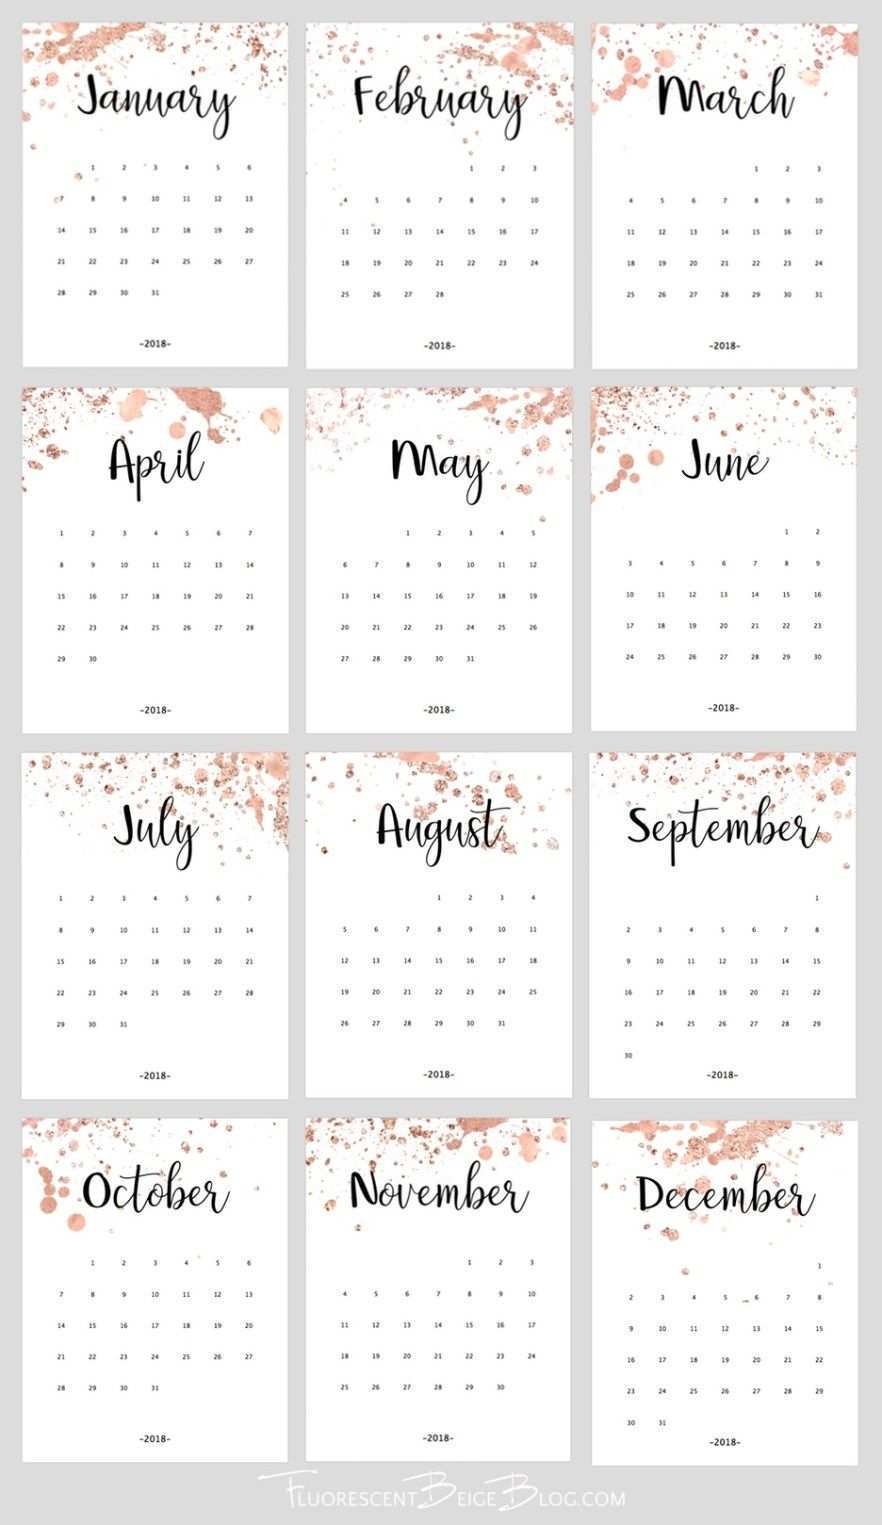 Free Printable 2018 Rose Gold Splatter Calendar Kalender Design Kalender Zum Ausdrucken Kalender